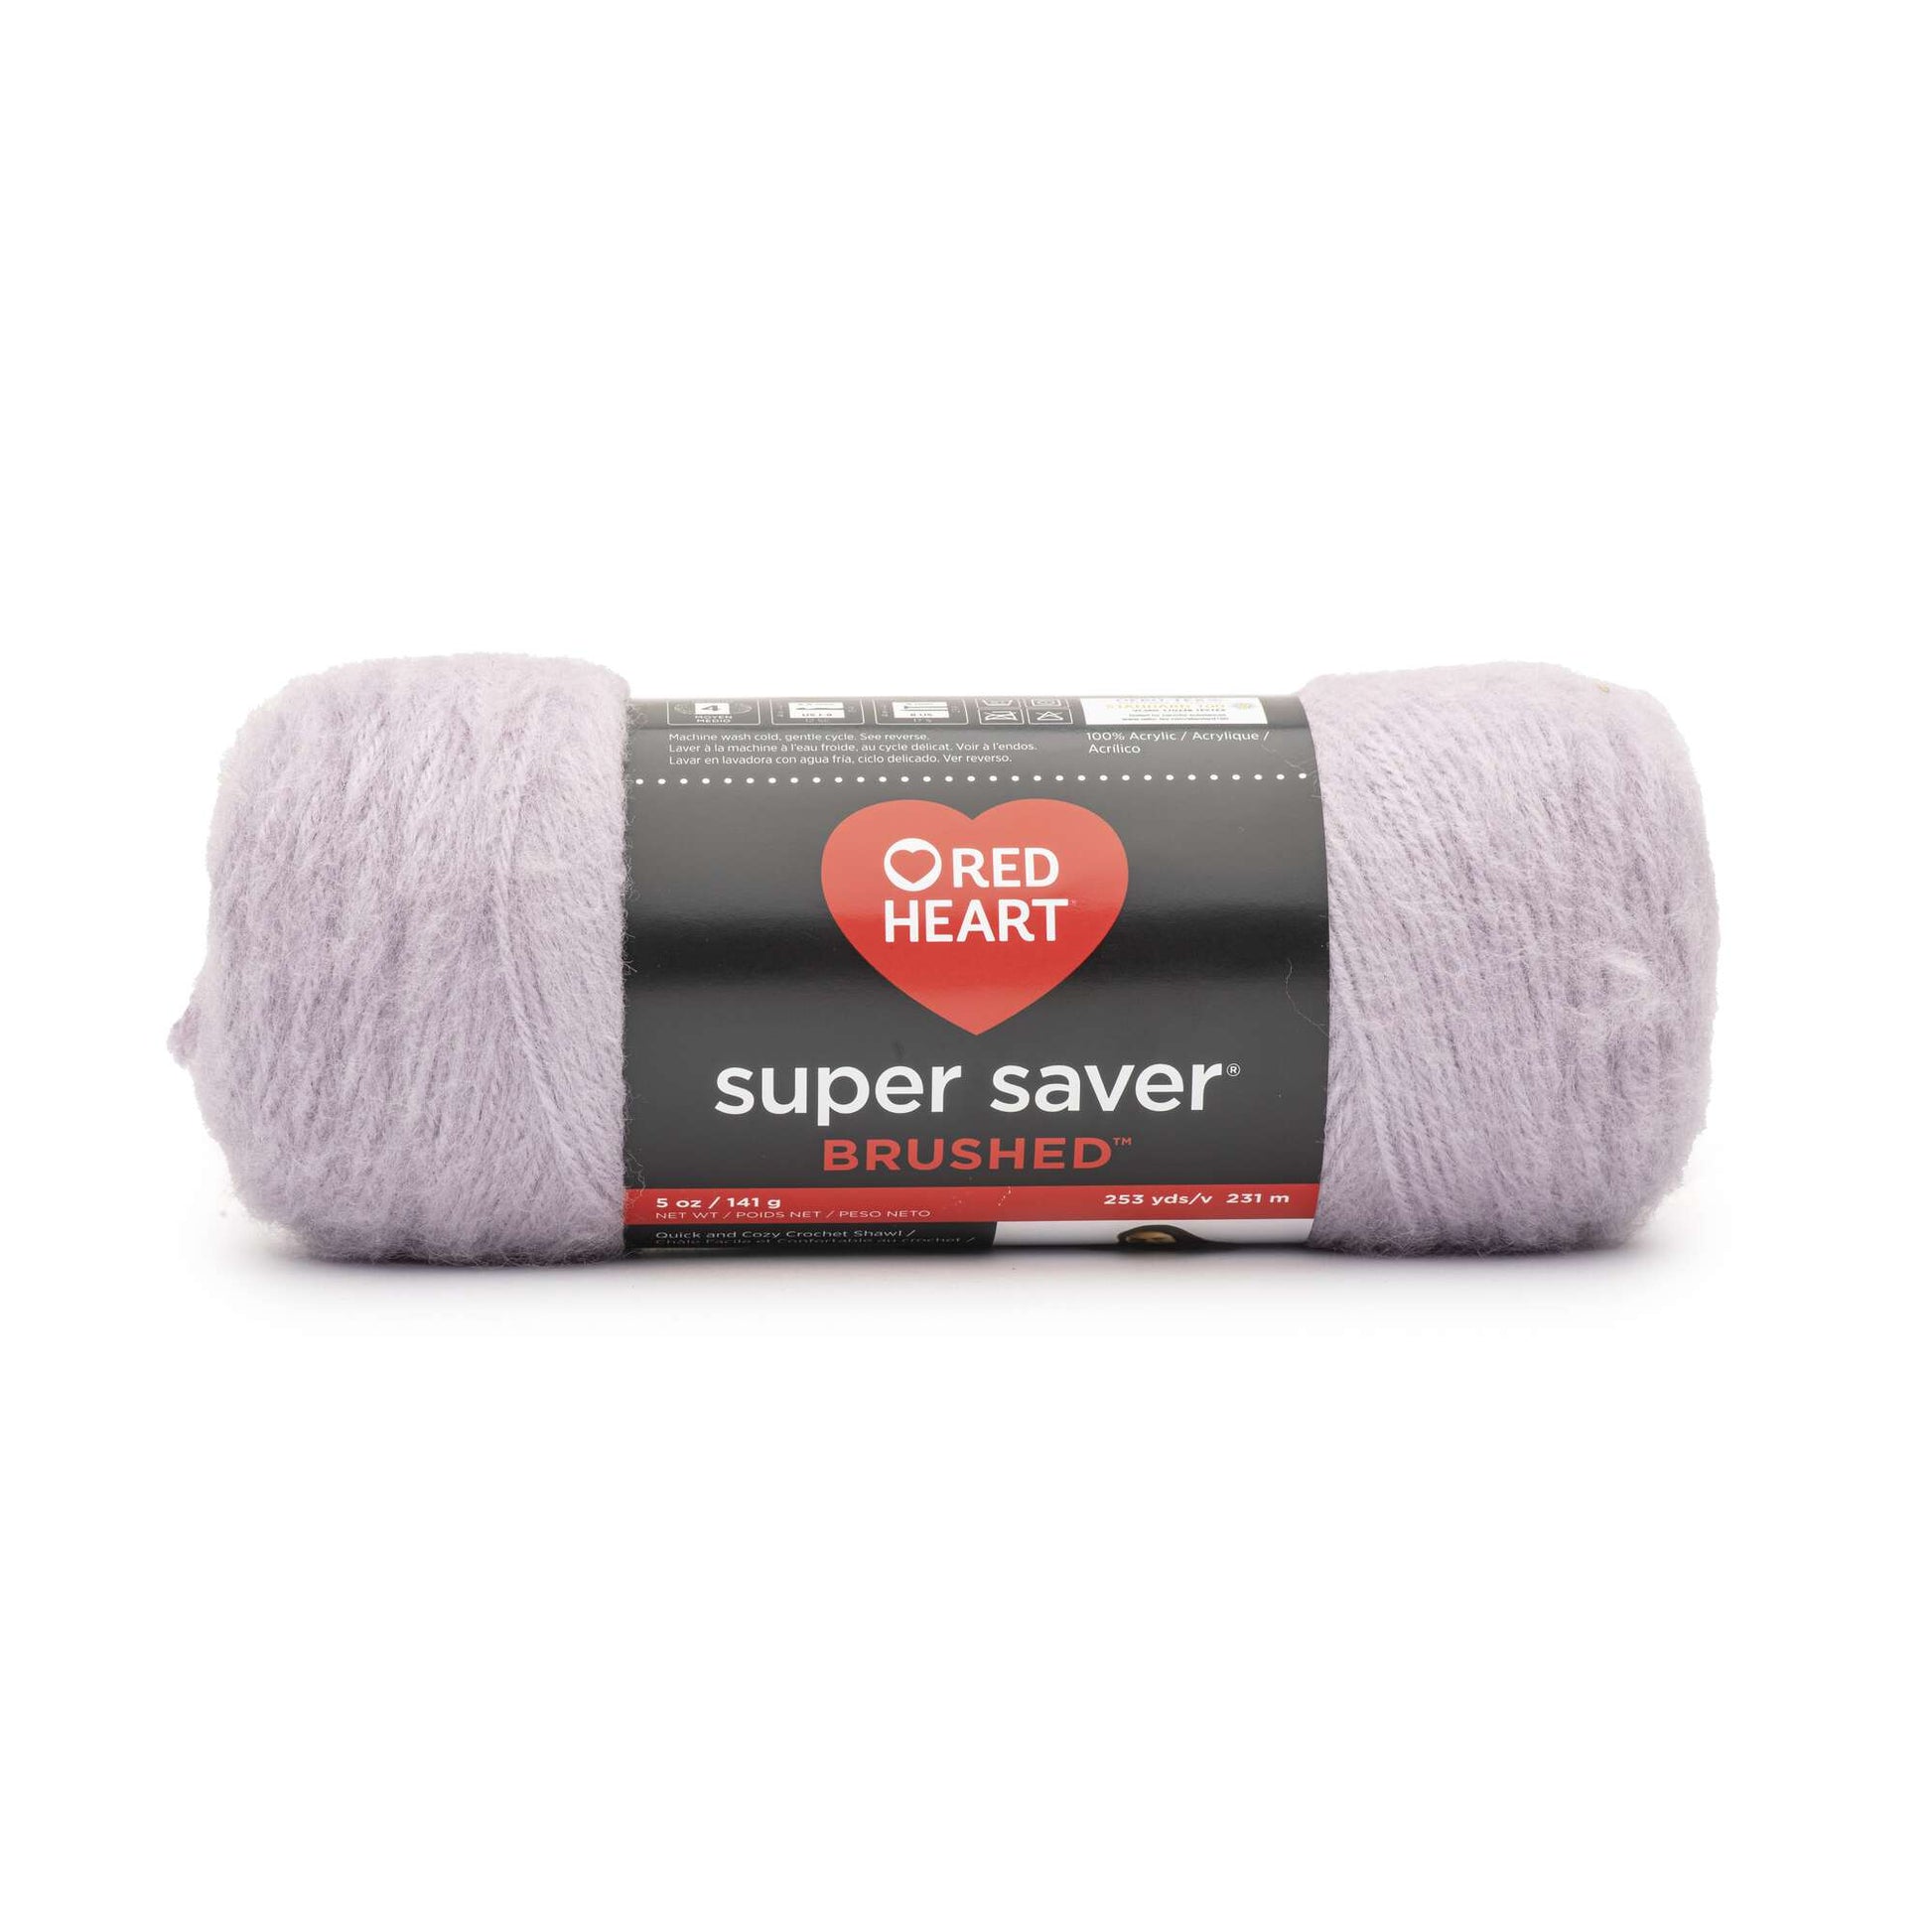 Walmart Yarn Review for Machine Knitting and Crocheting 